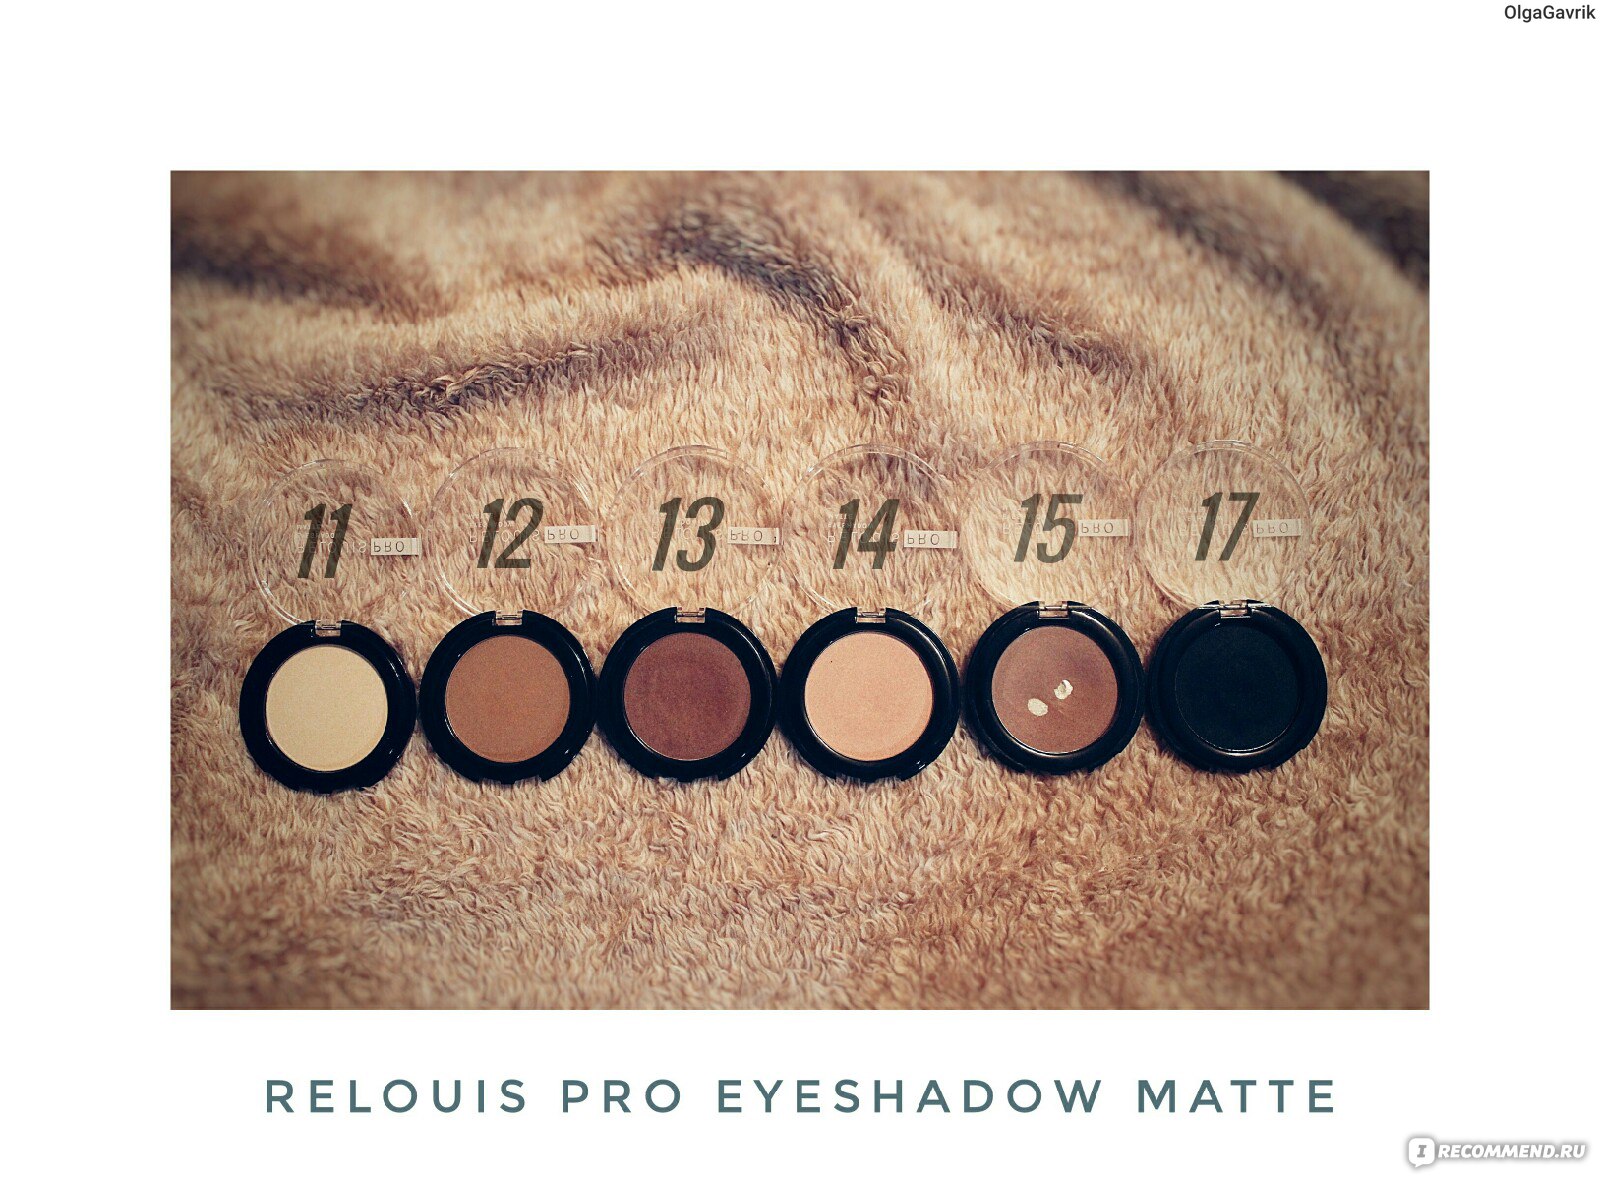 Relouis pro eyeshadow